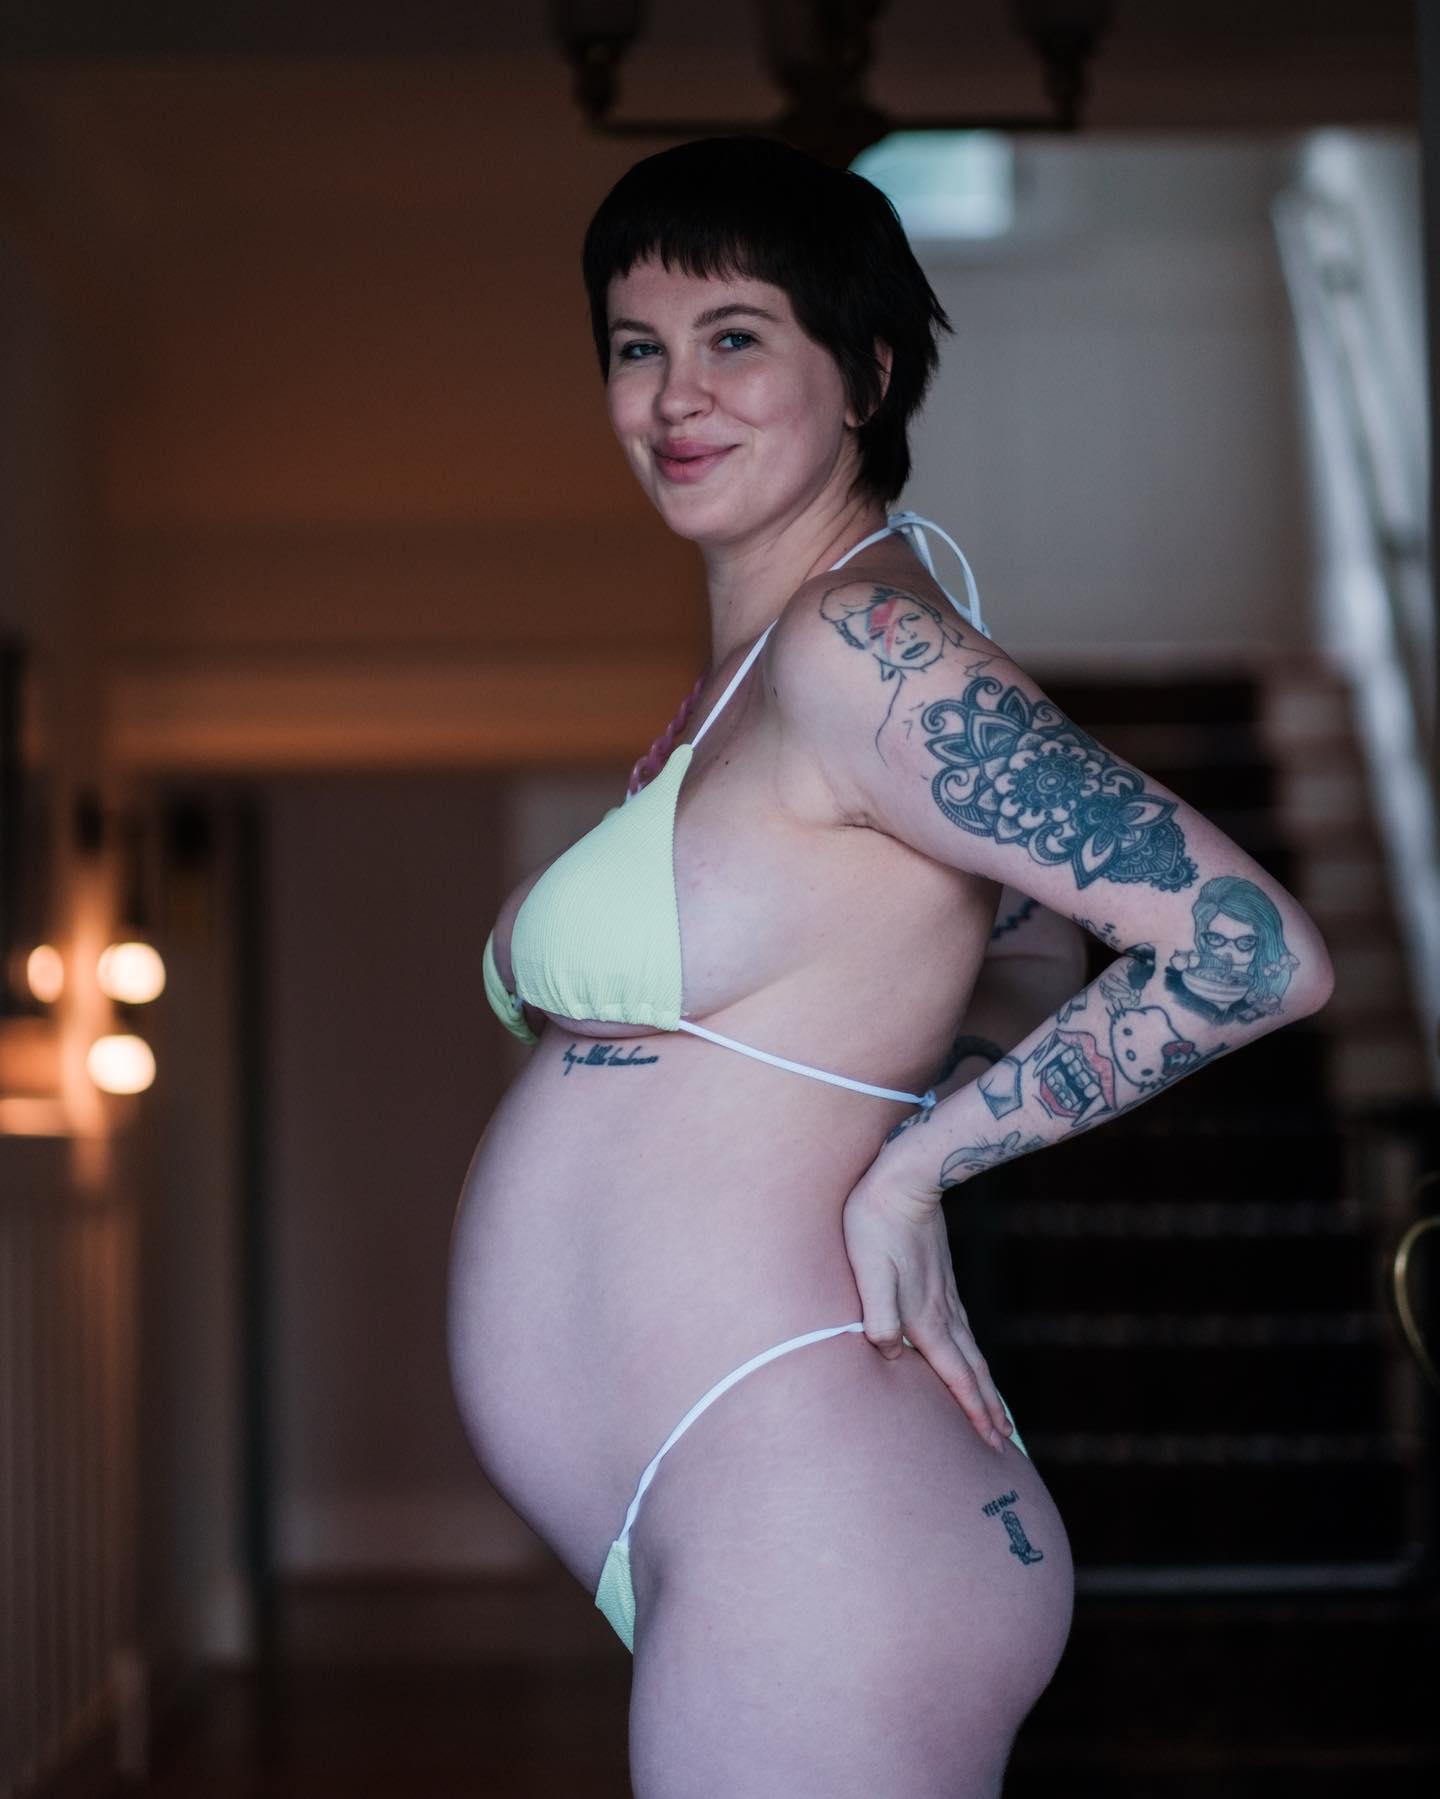 Ireland Baldwin marks the 6 month mark of her first pregnancy posing in a green bikini